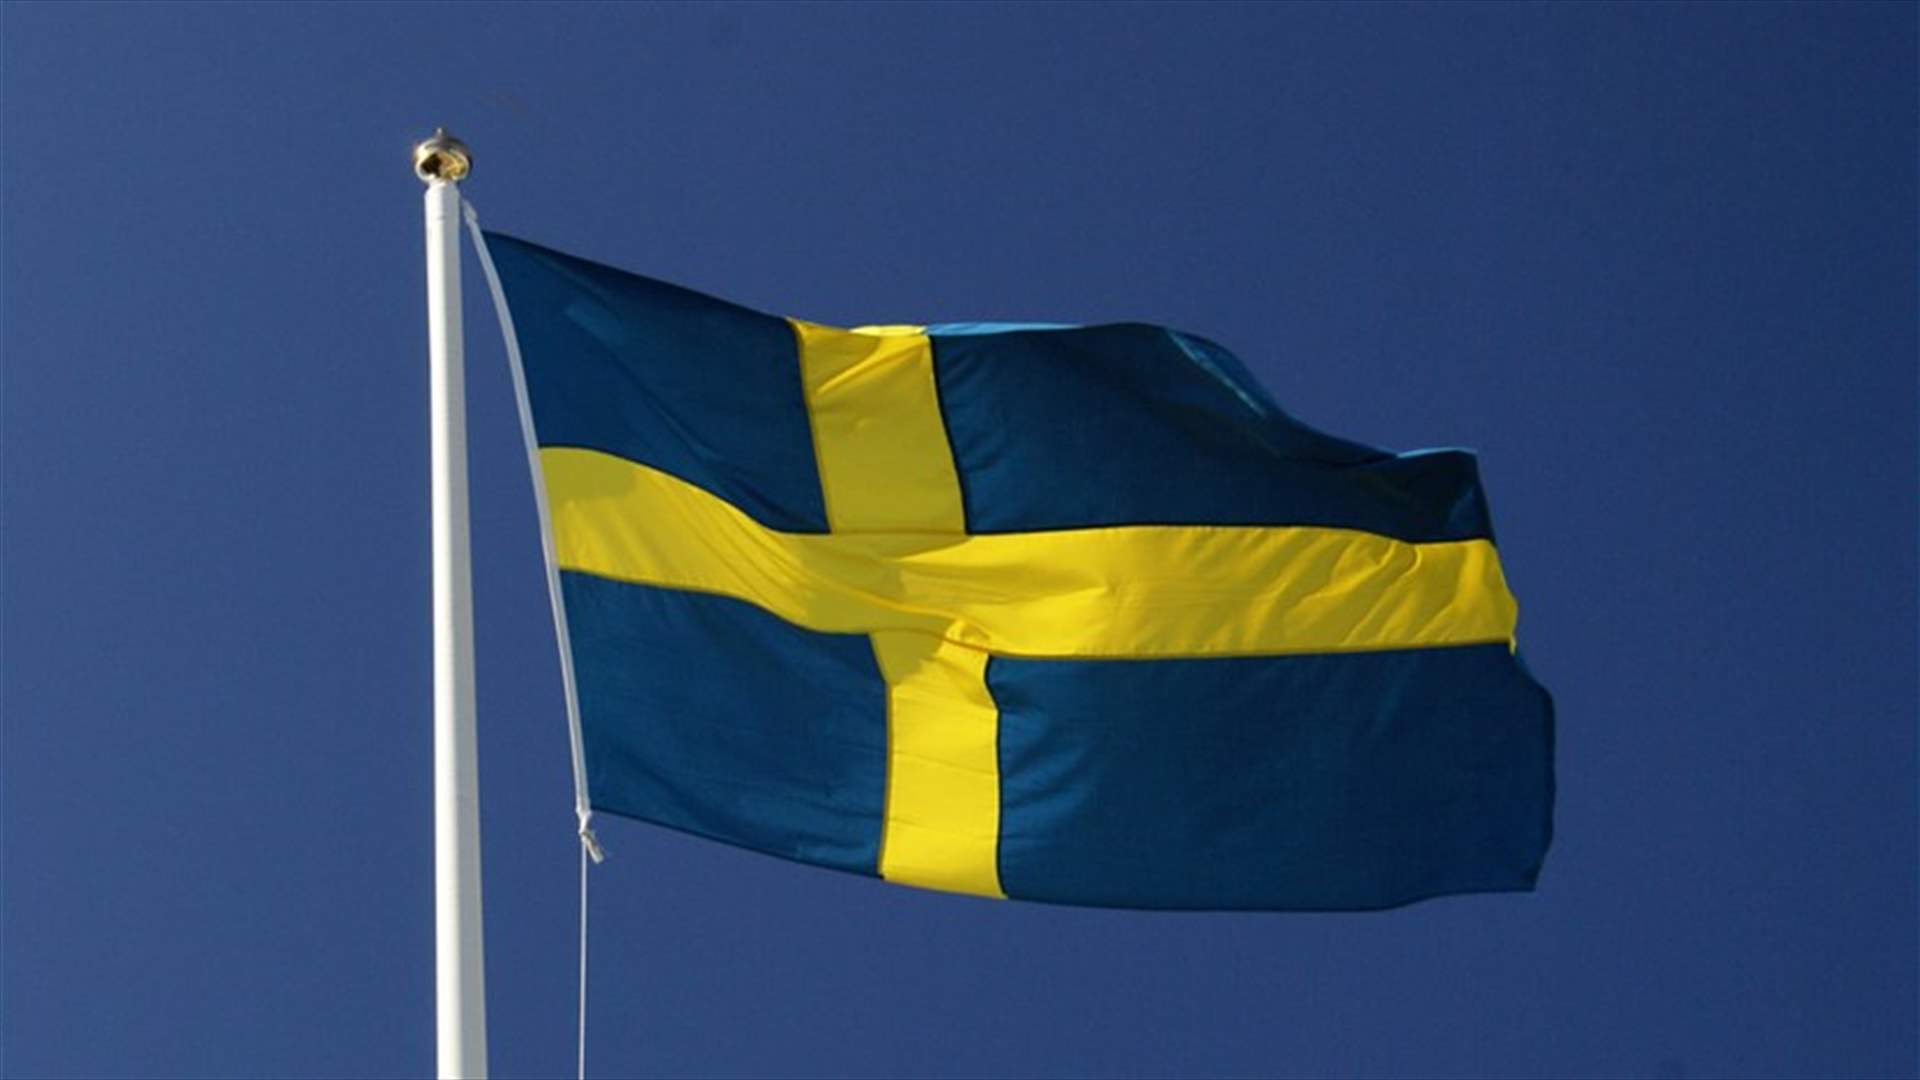 Lebanese killed by refugee in Sweden